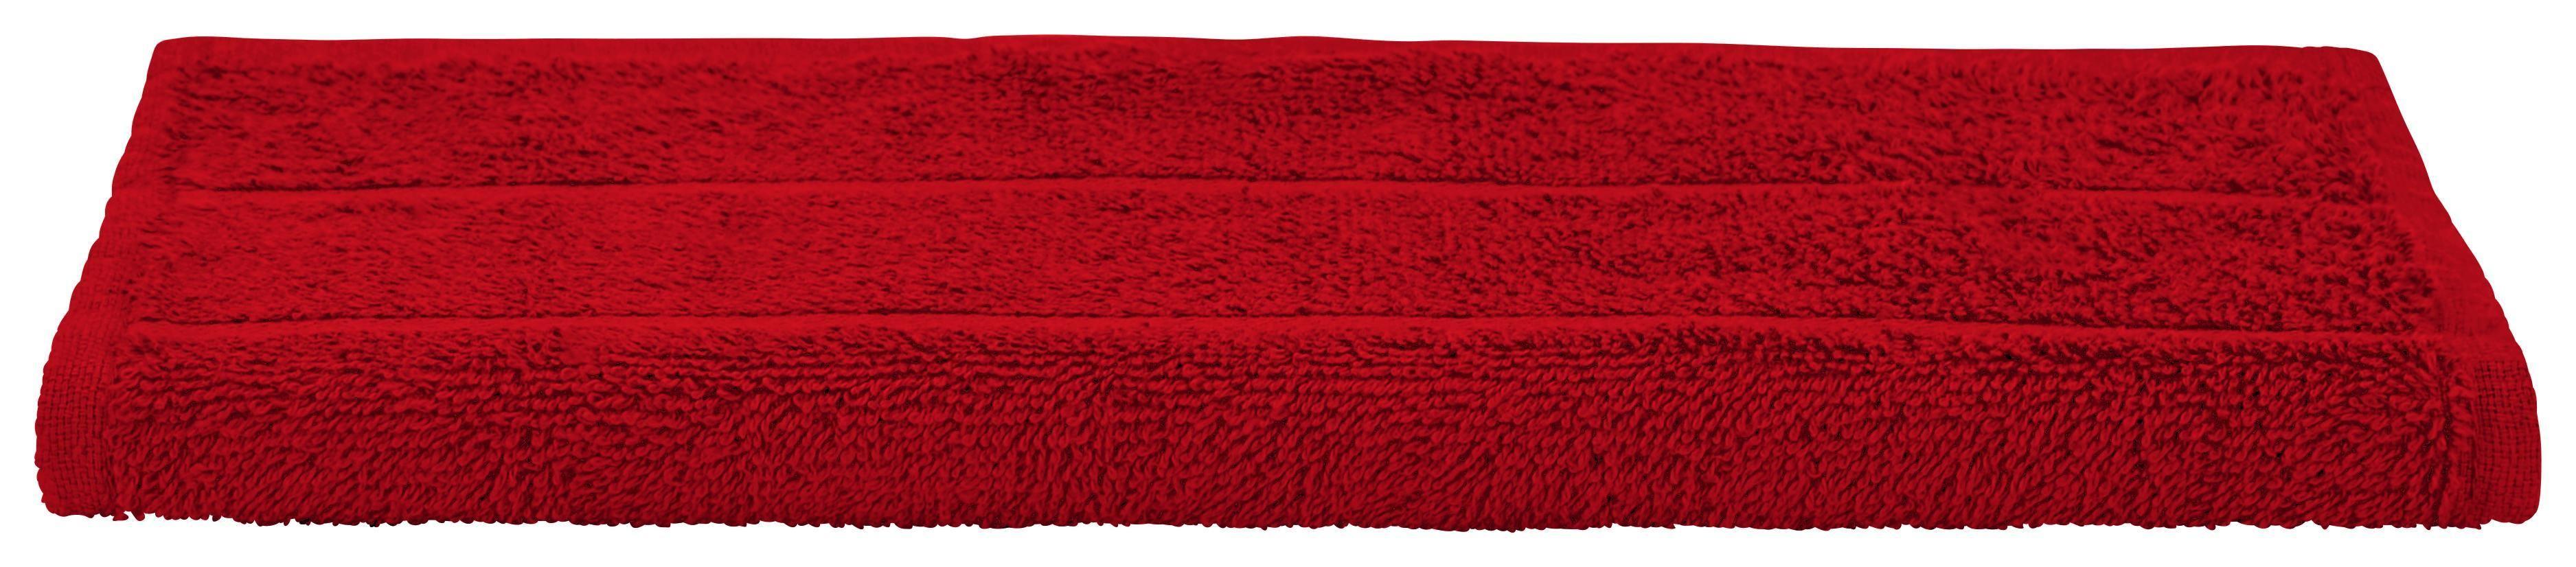 Handtuch Liliane - Bordeaux, KONVENTIONELL, Textil (50/100cm) - Ondega